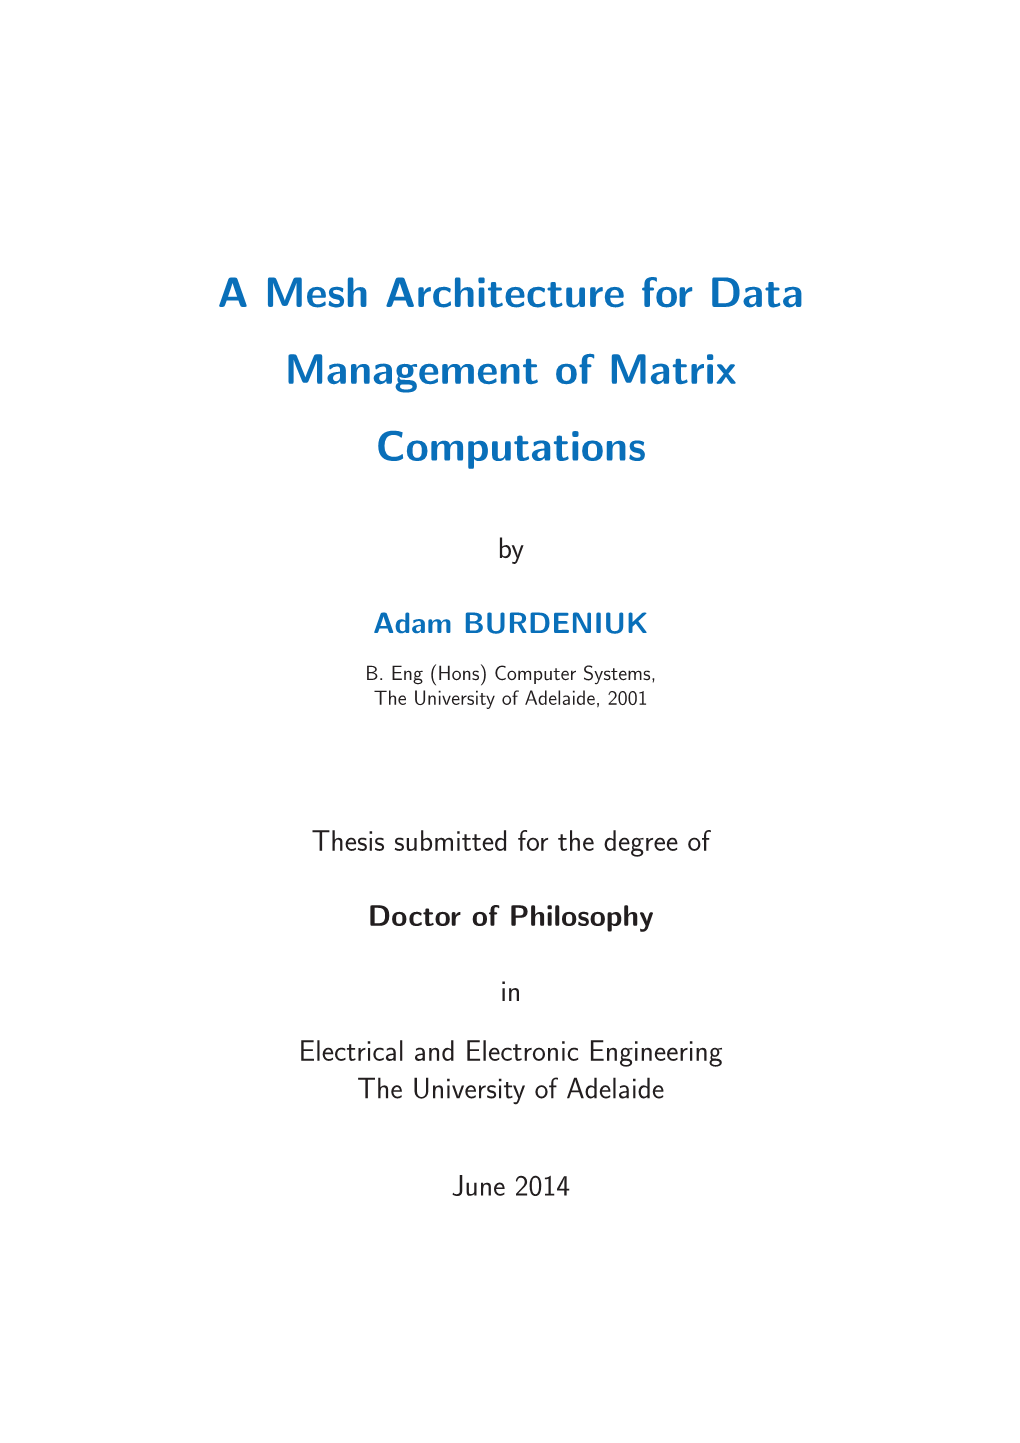 A Mesh Architecture for Data Management of Matrix Computations